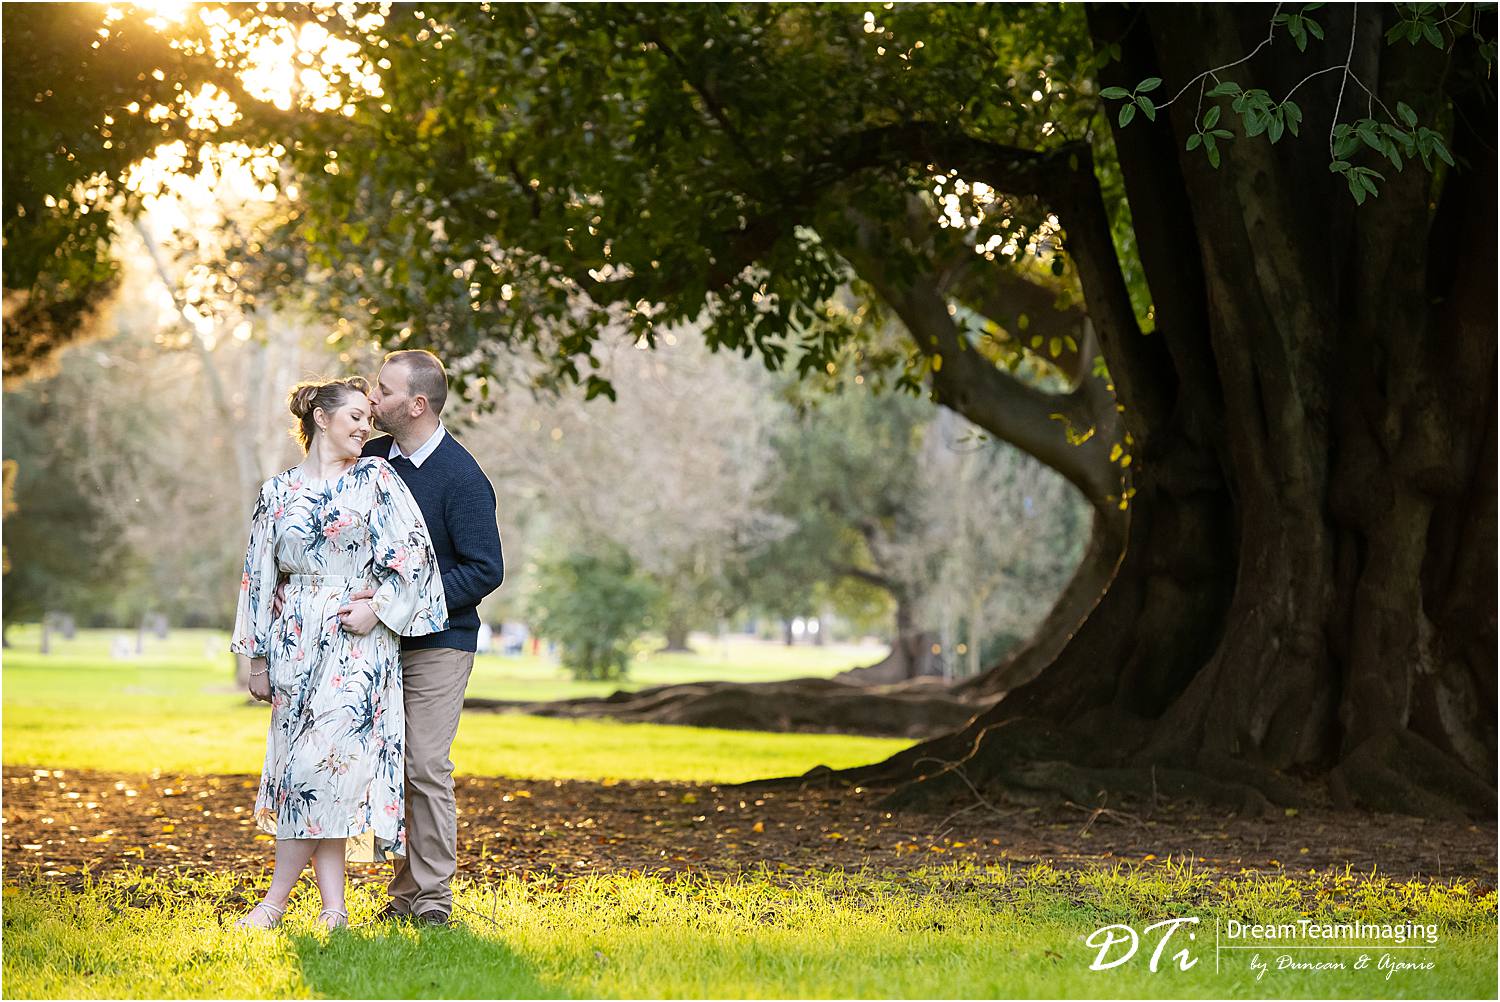 Couple engagement session at Botanic Gardens Adelaide, couple holding each other